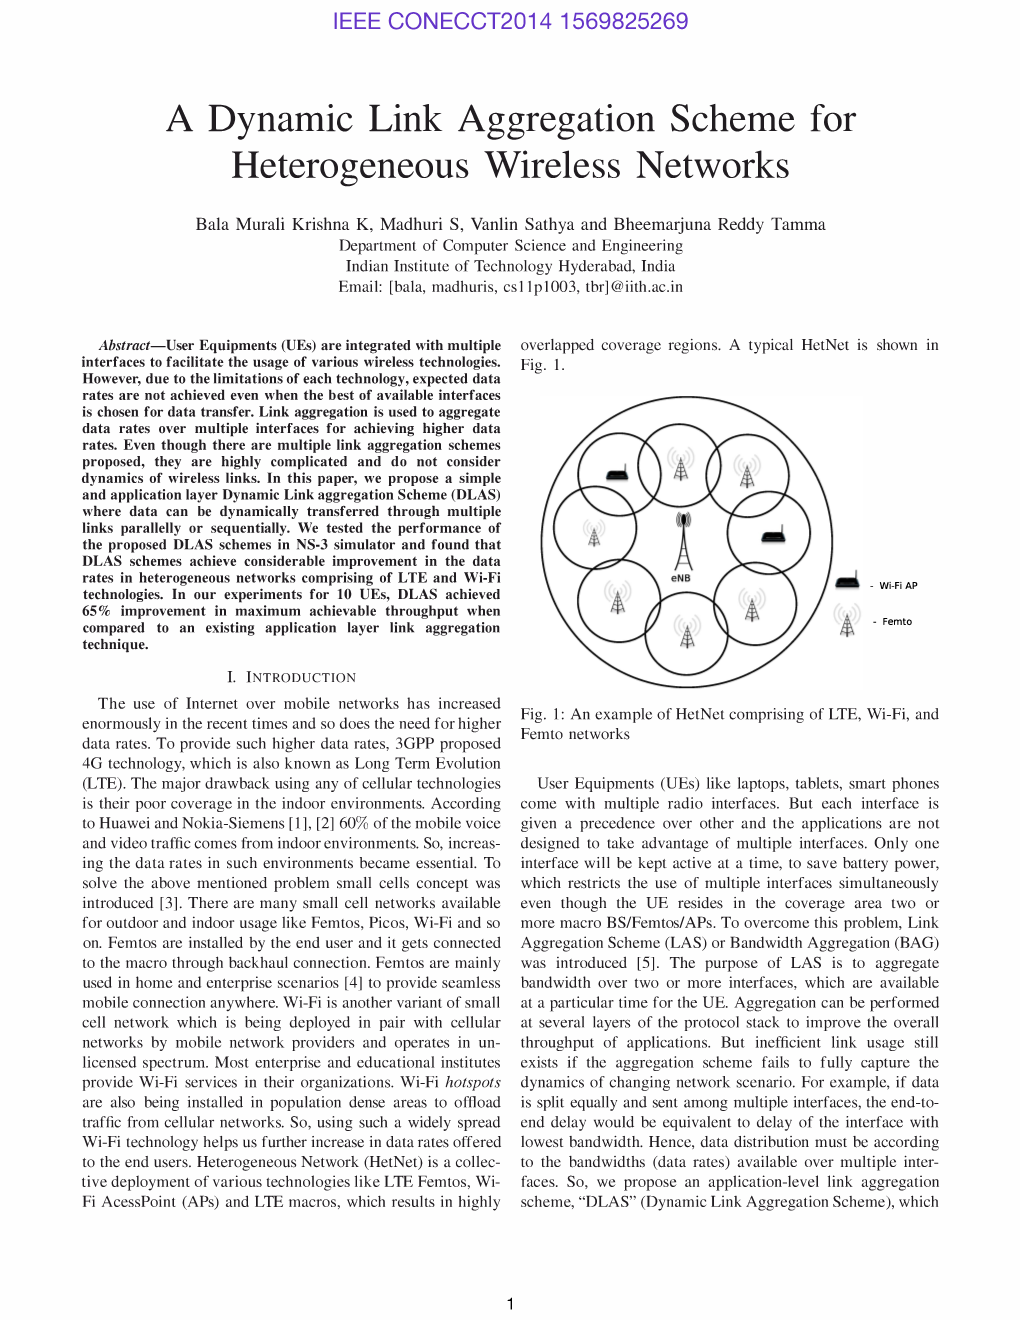 A Dynamic Link Aggregation Scheme for Heterogeneous Wireless Networks